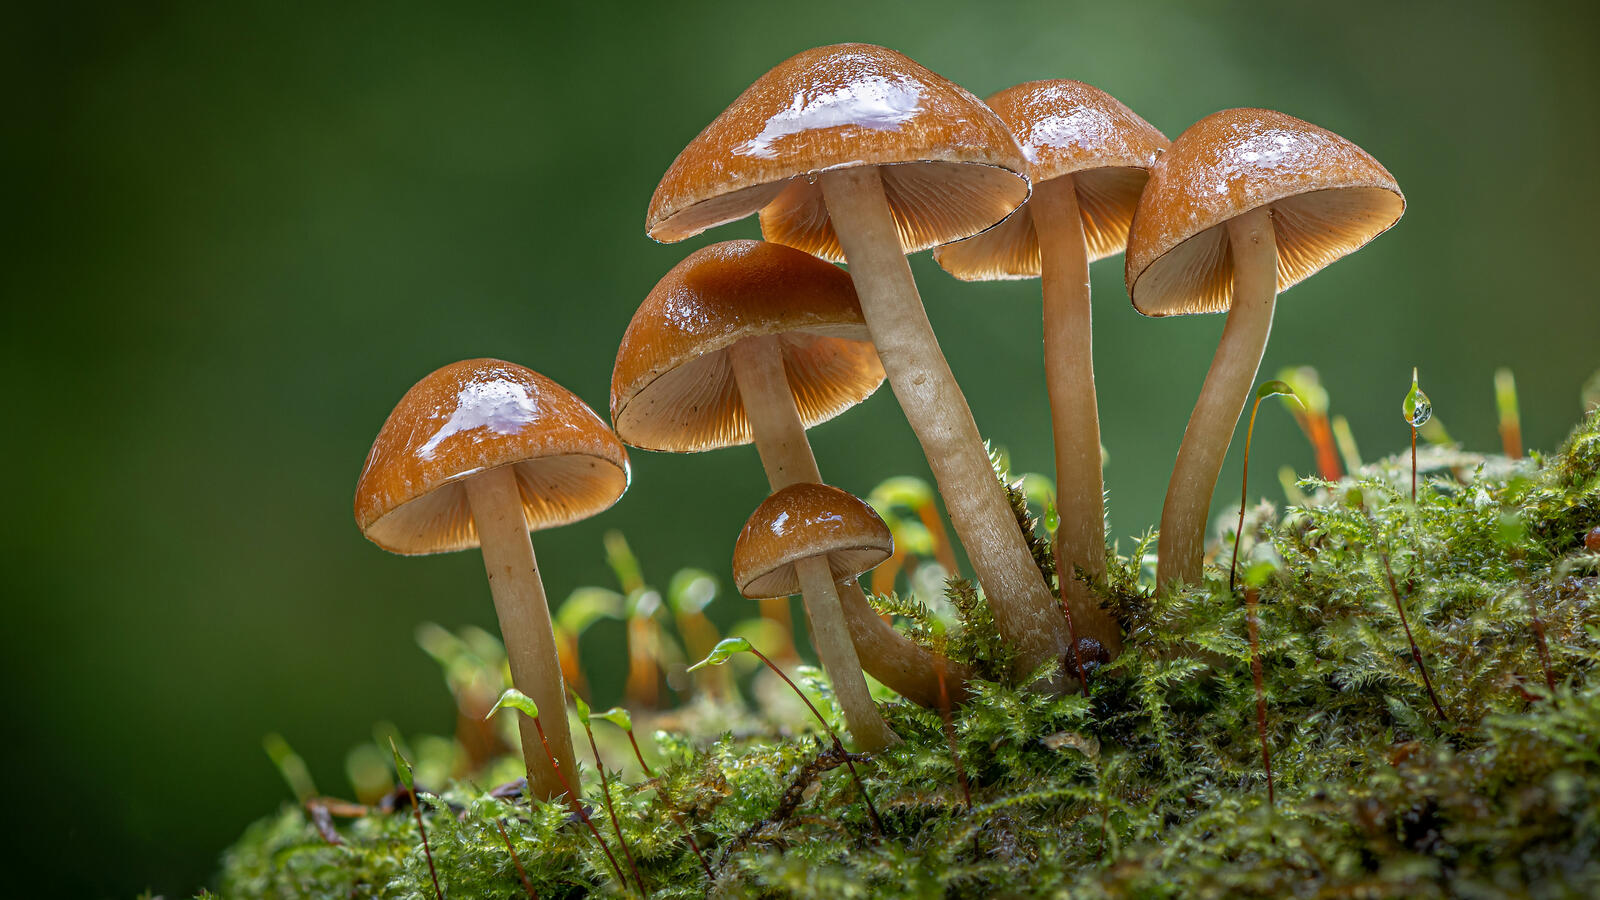 Free photo Inedible mushrooms growing on green moss